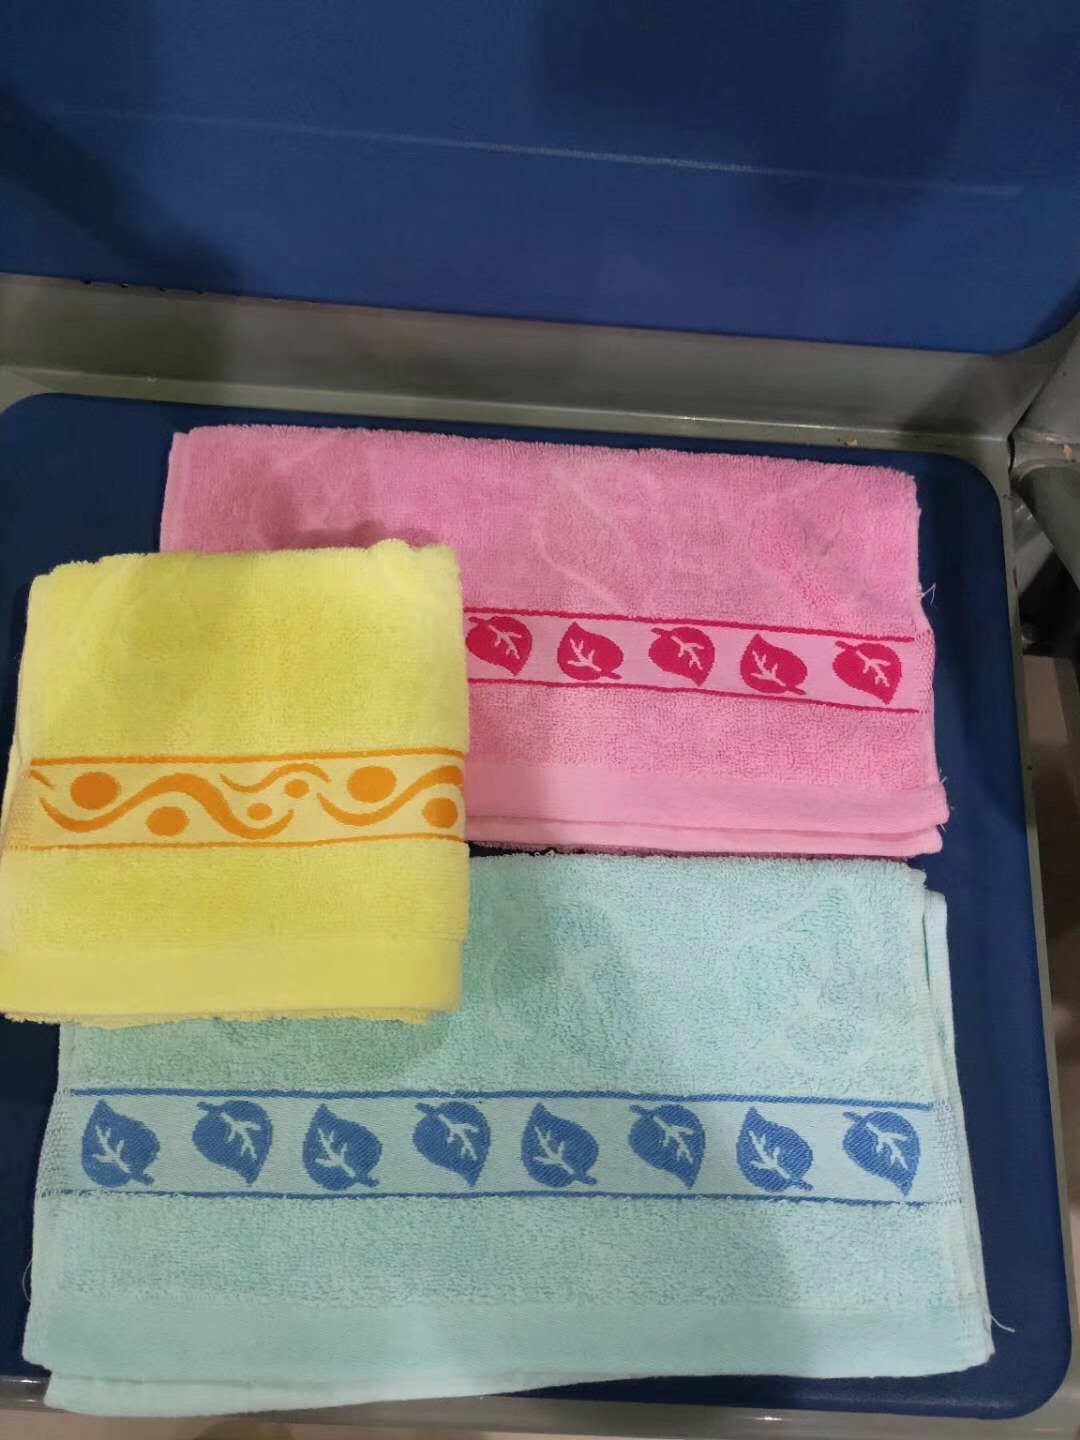 high quality woven cotton jacquard towel